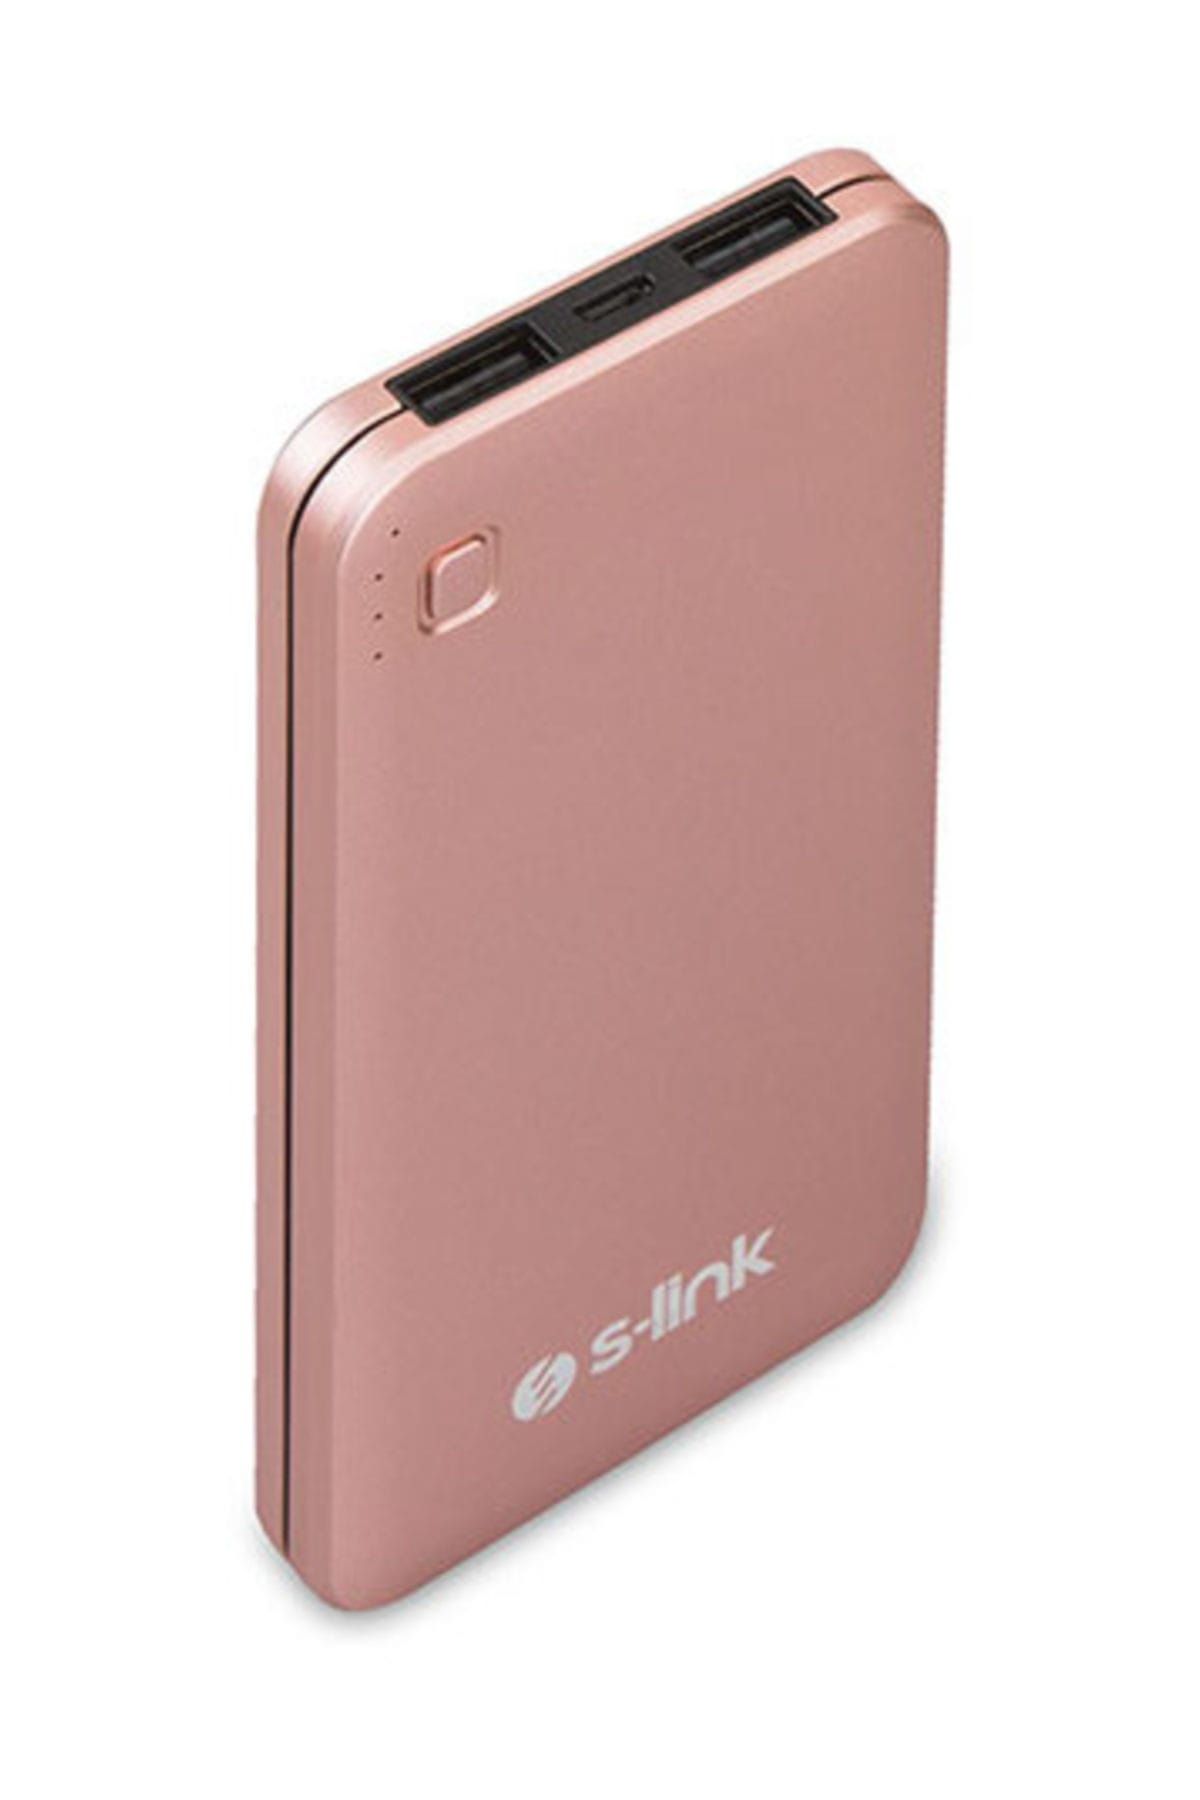 S-Link 2 Usb'li  10000mAh  Powerbank Rose Gold Taşınabilir Pil Şarj Cihazı  ( Hızlı Şarj )